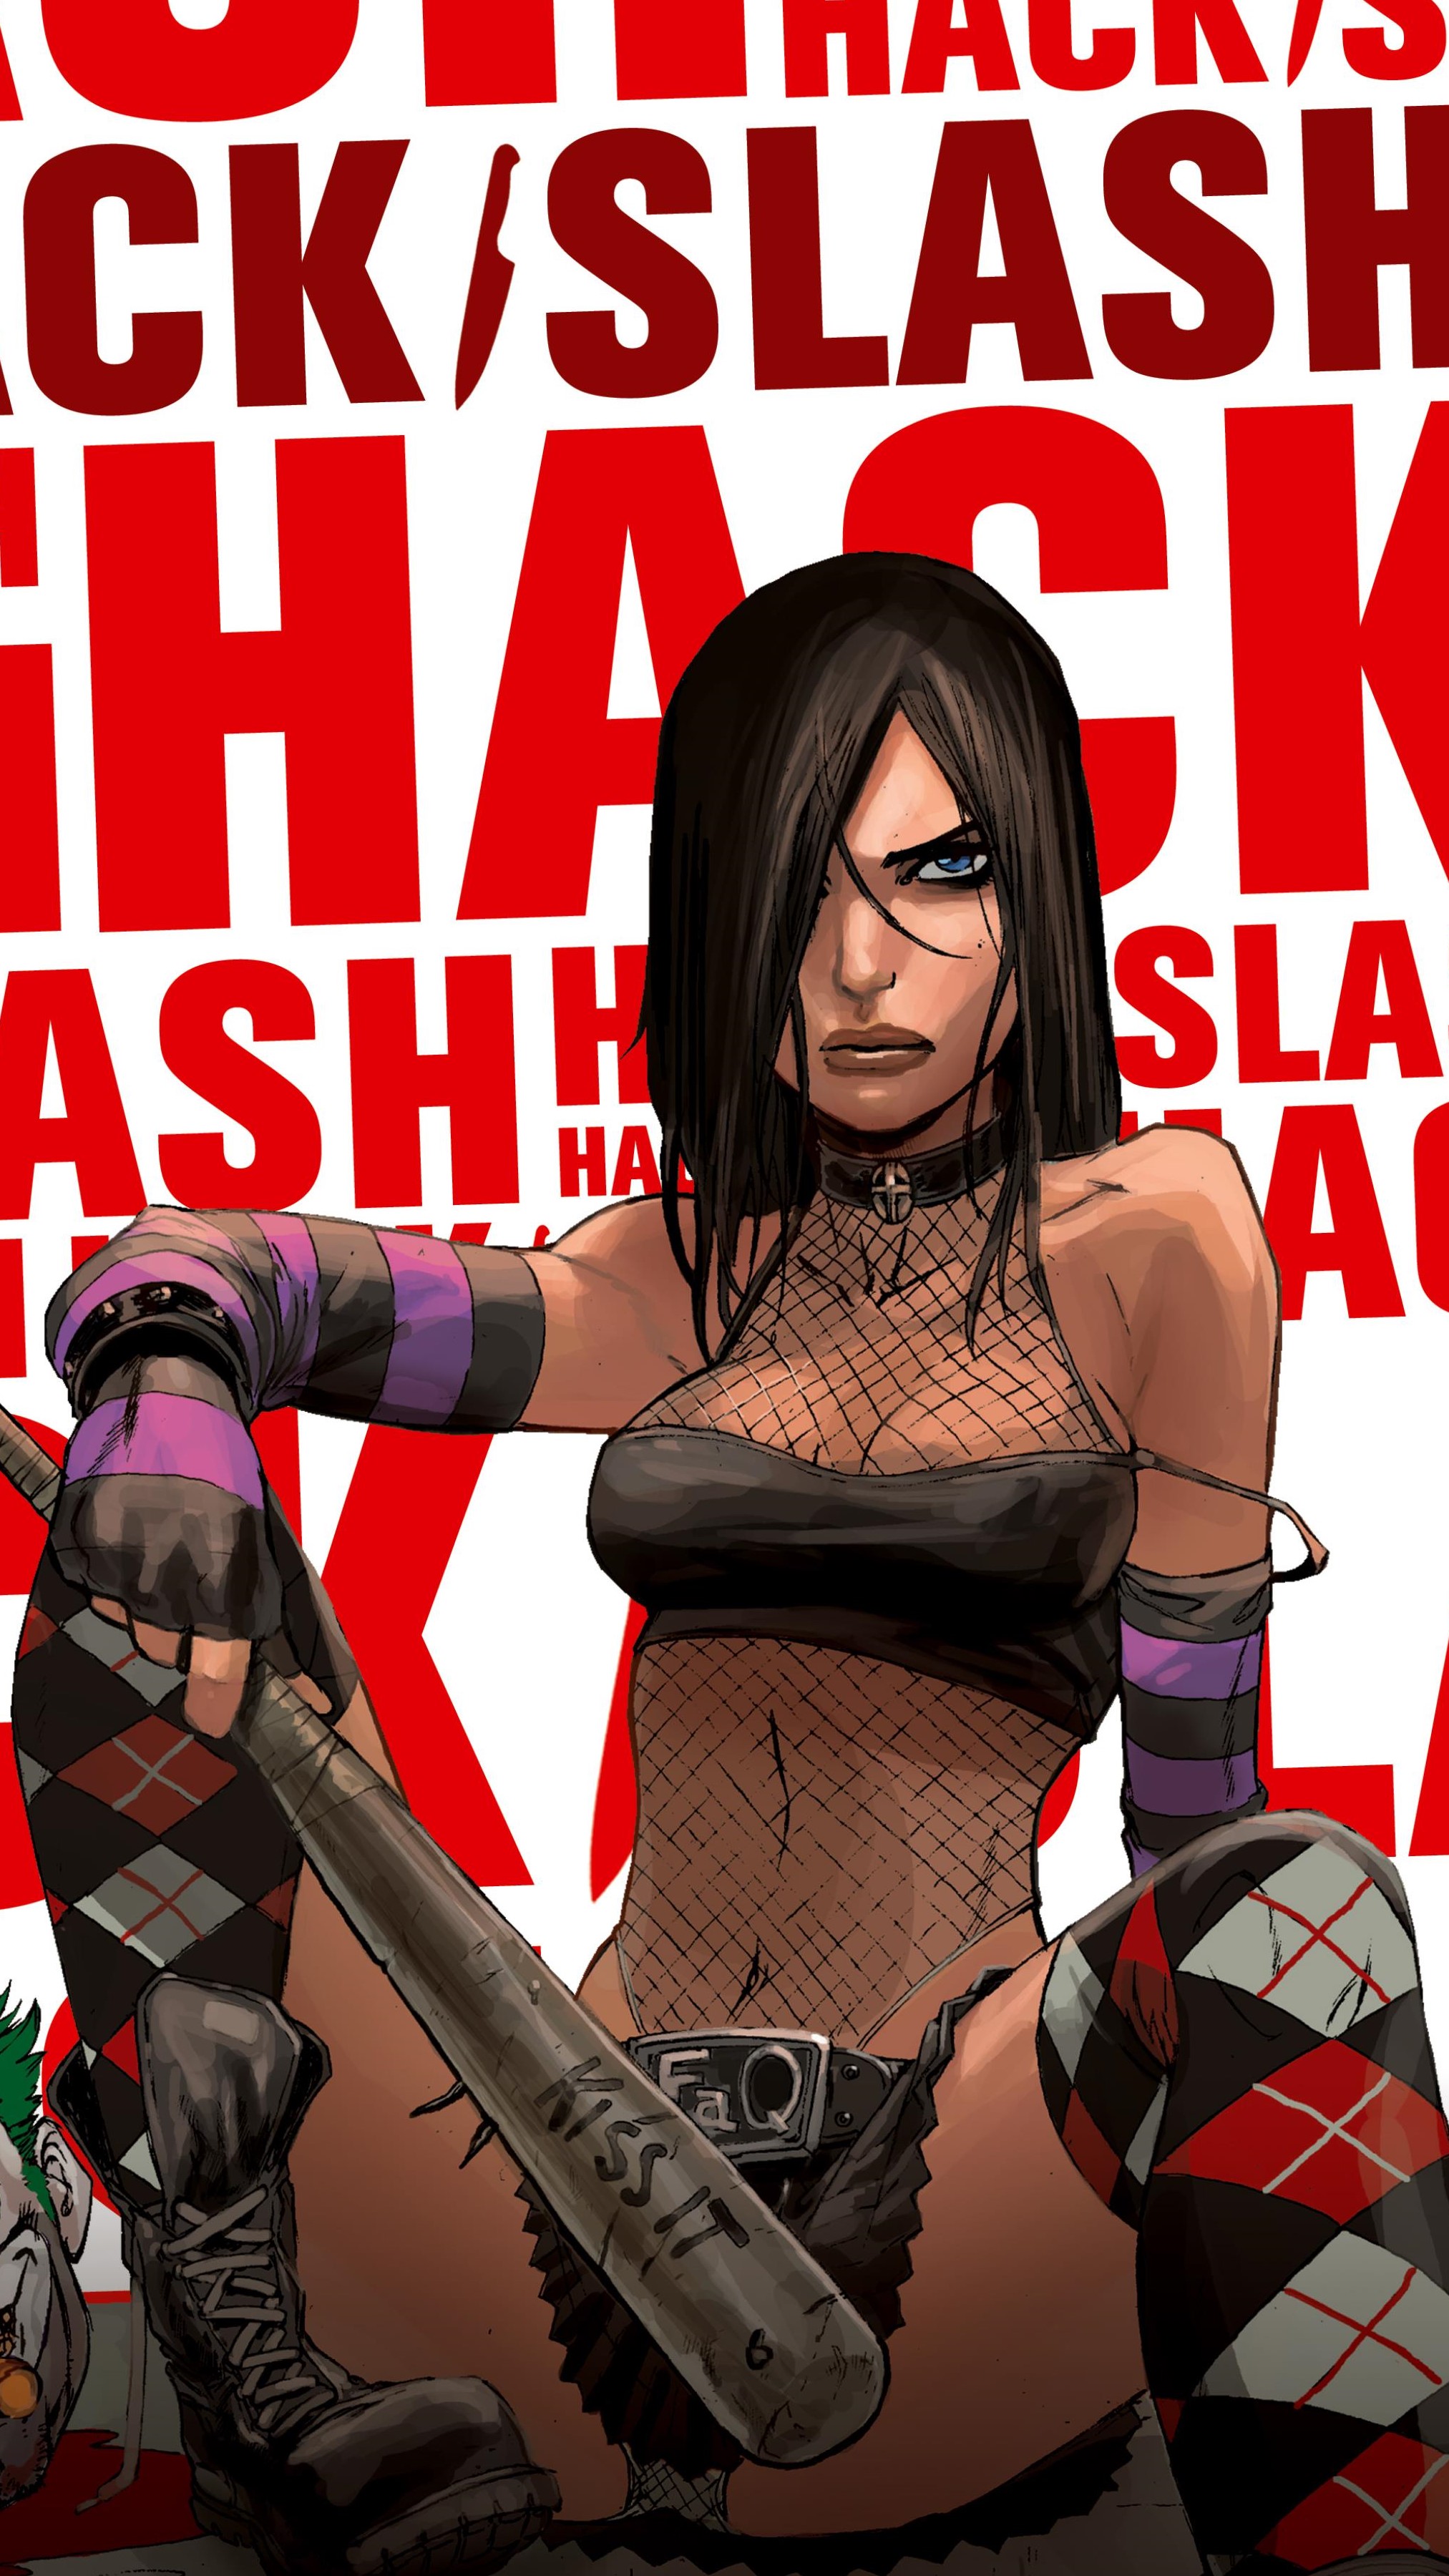 General 2025x3600 Hack/Slash comic art comics women sitting artwork boobs belly brunette baseball bat angry portrait display digital art